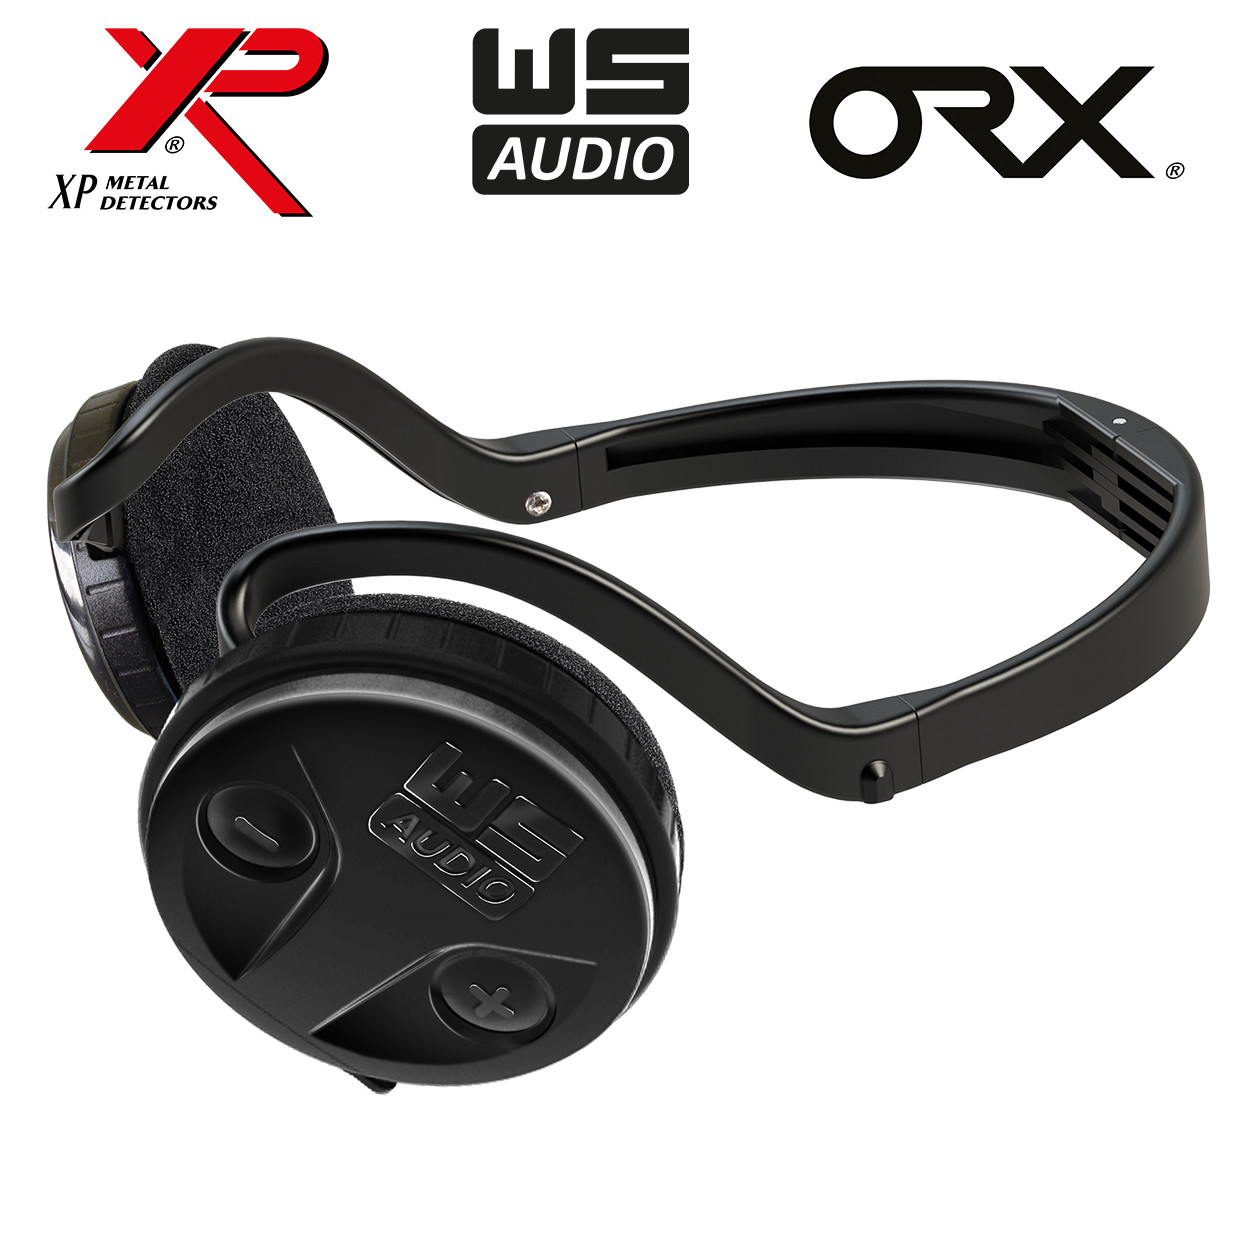 XP ORX 22 Metalldetektor RC WSA HF